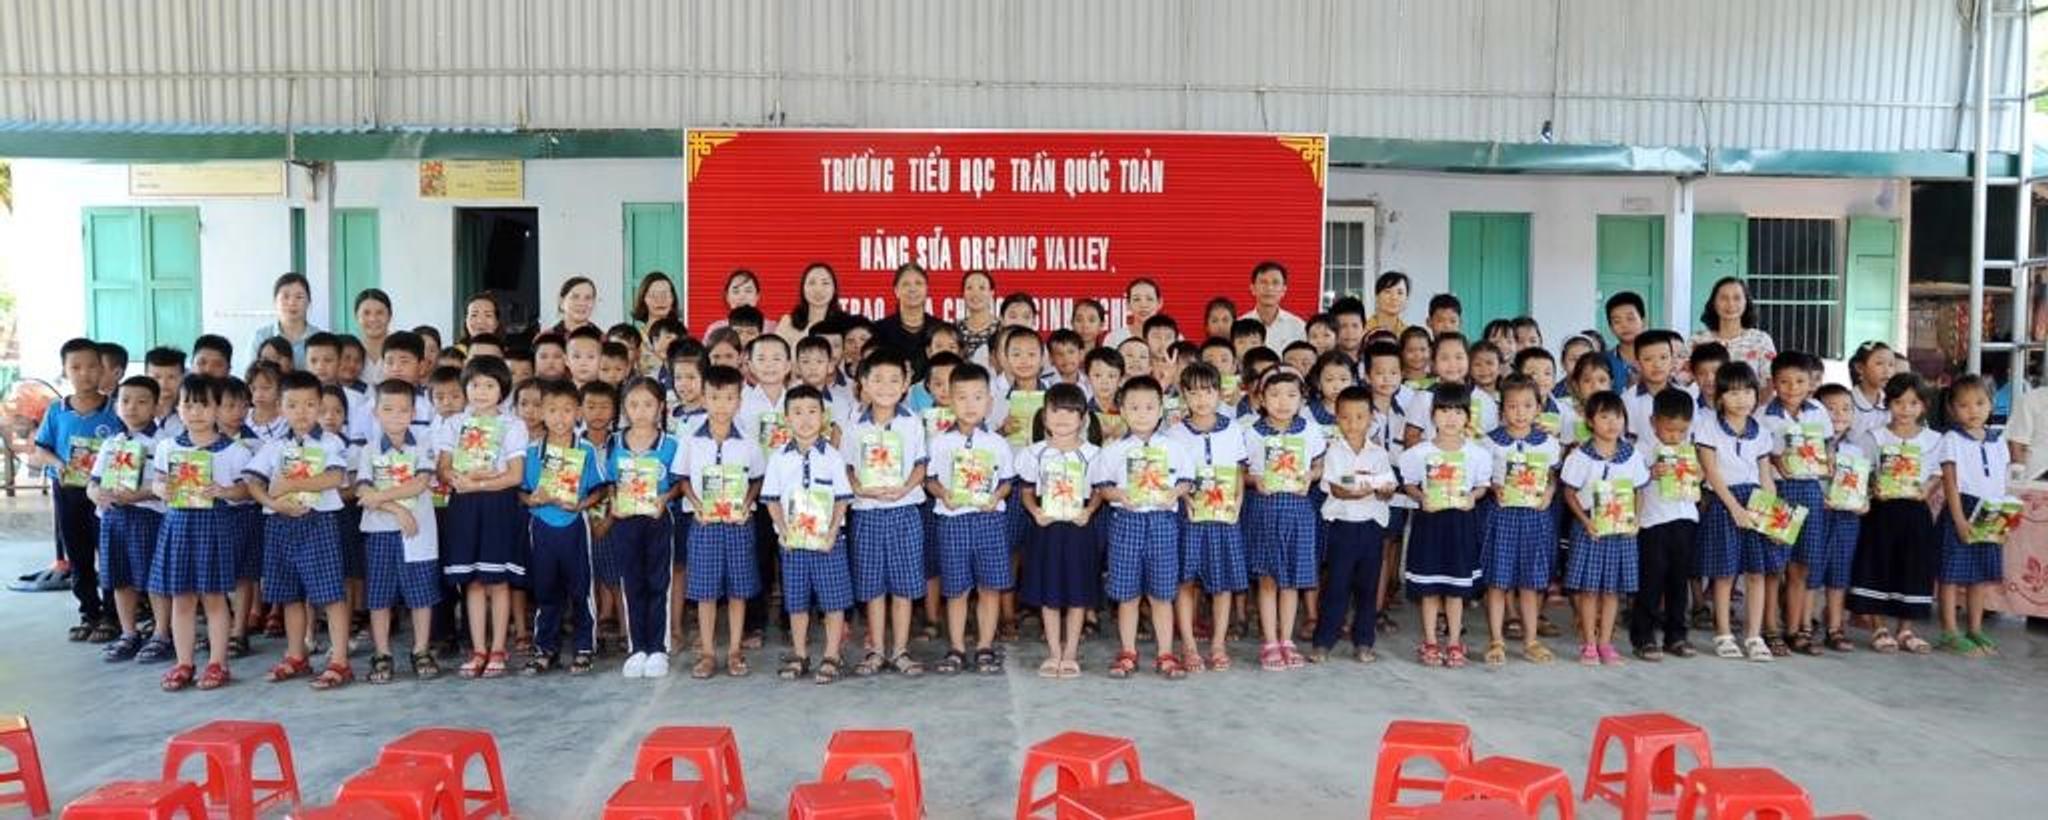 School children in Vietnam hold organic products.